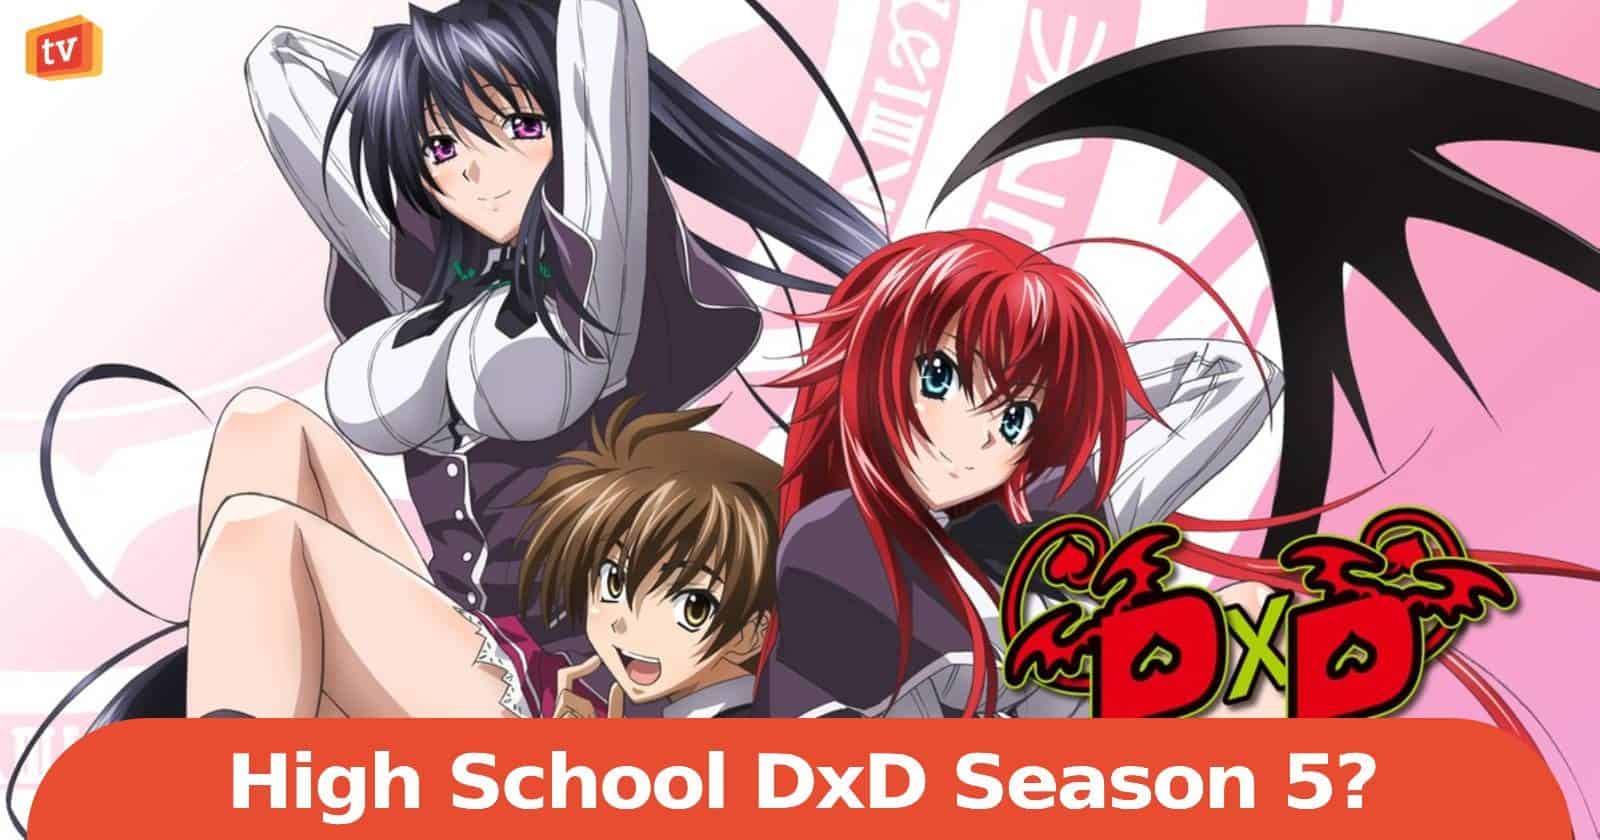 High School DxD Season 5? A Cult Phenomenon in Limbo